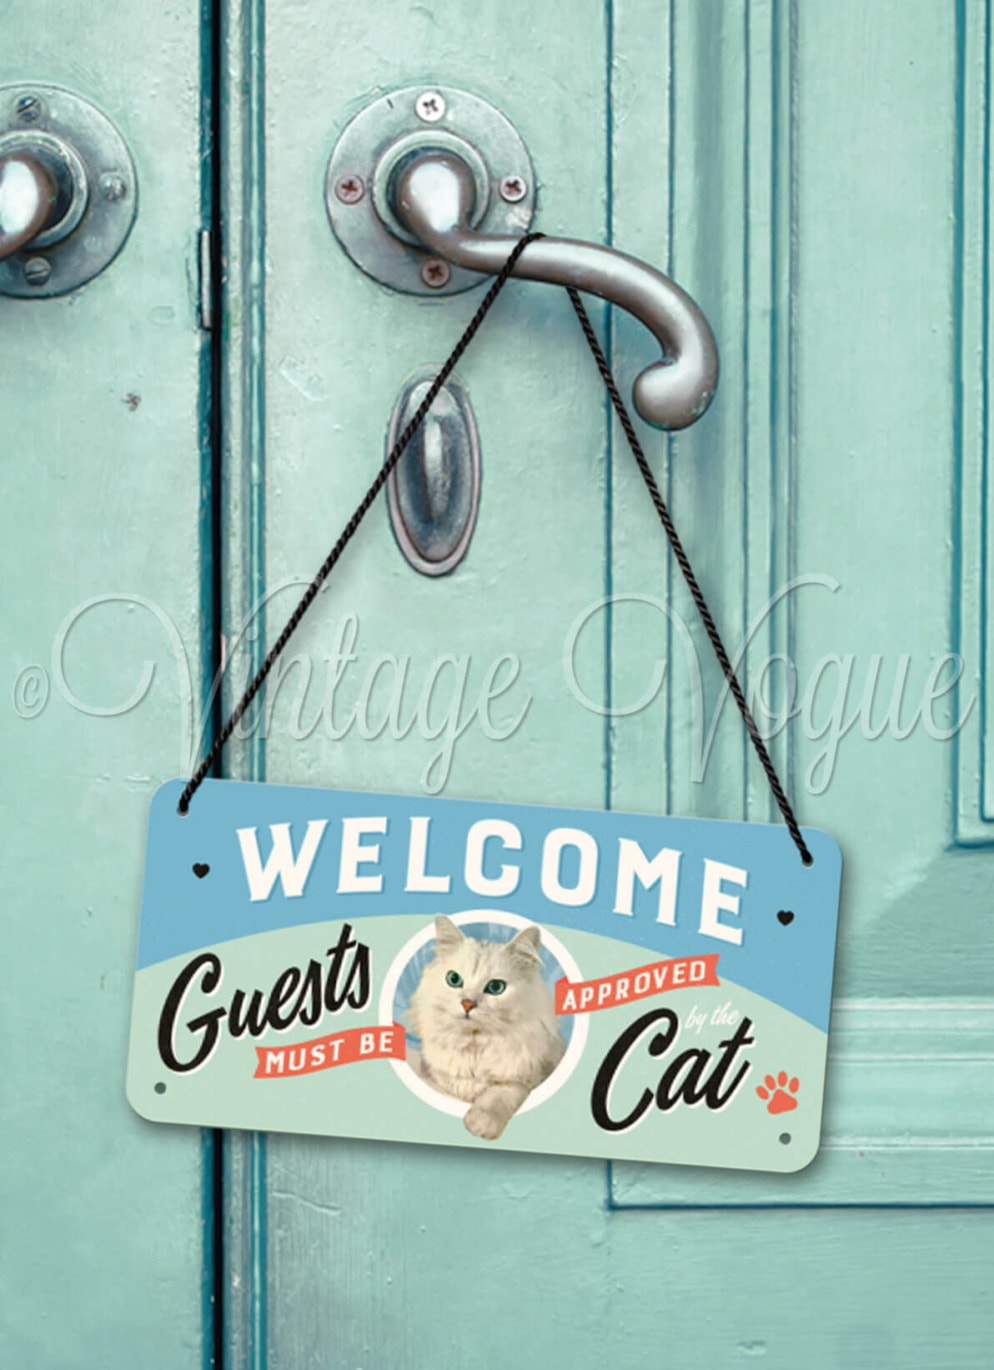 Nostalgic Art Retro Hängeschild "Welcome Guests Cat"